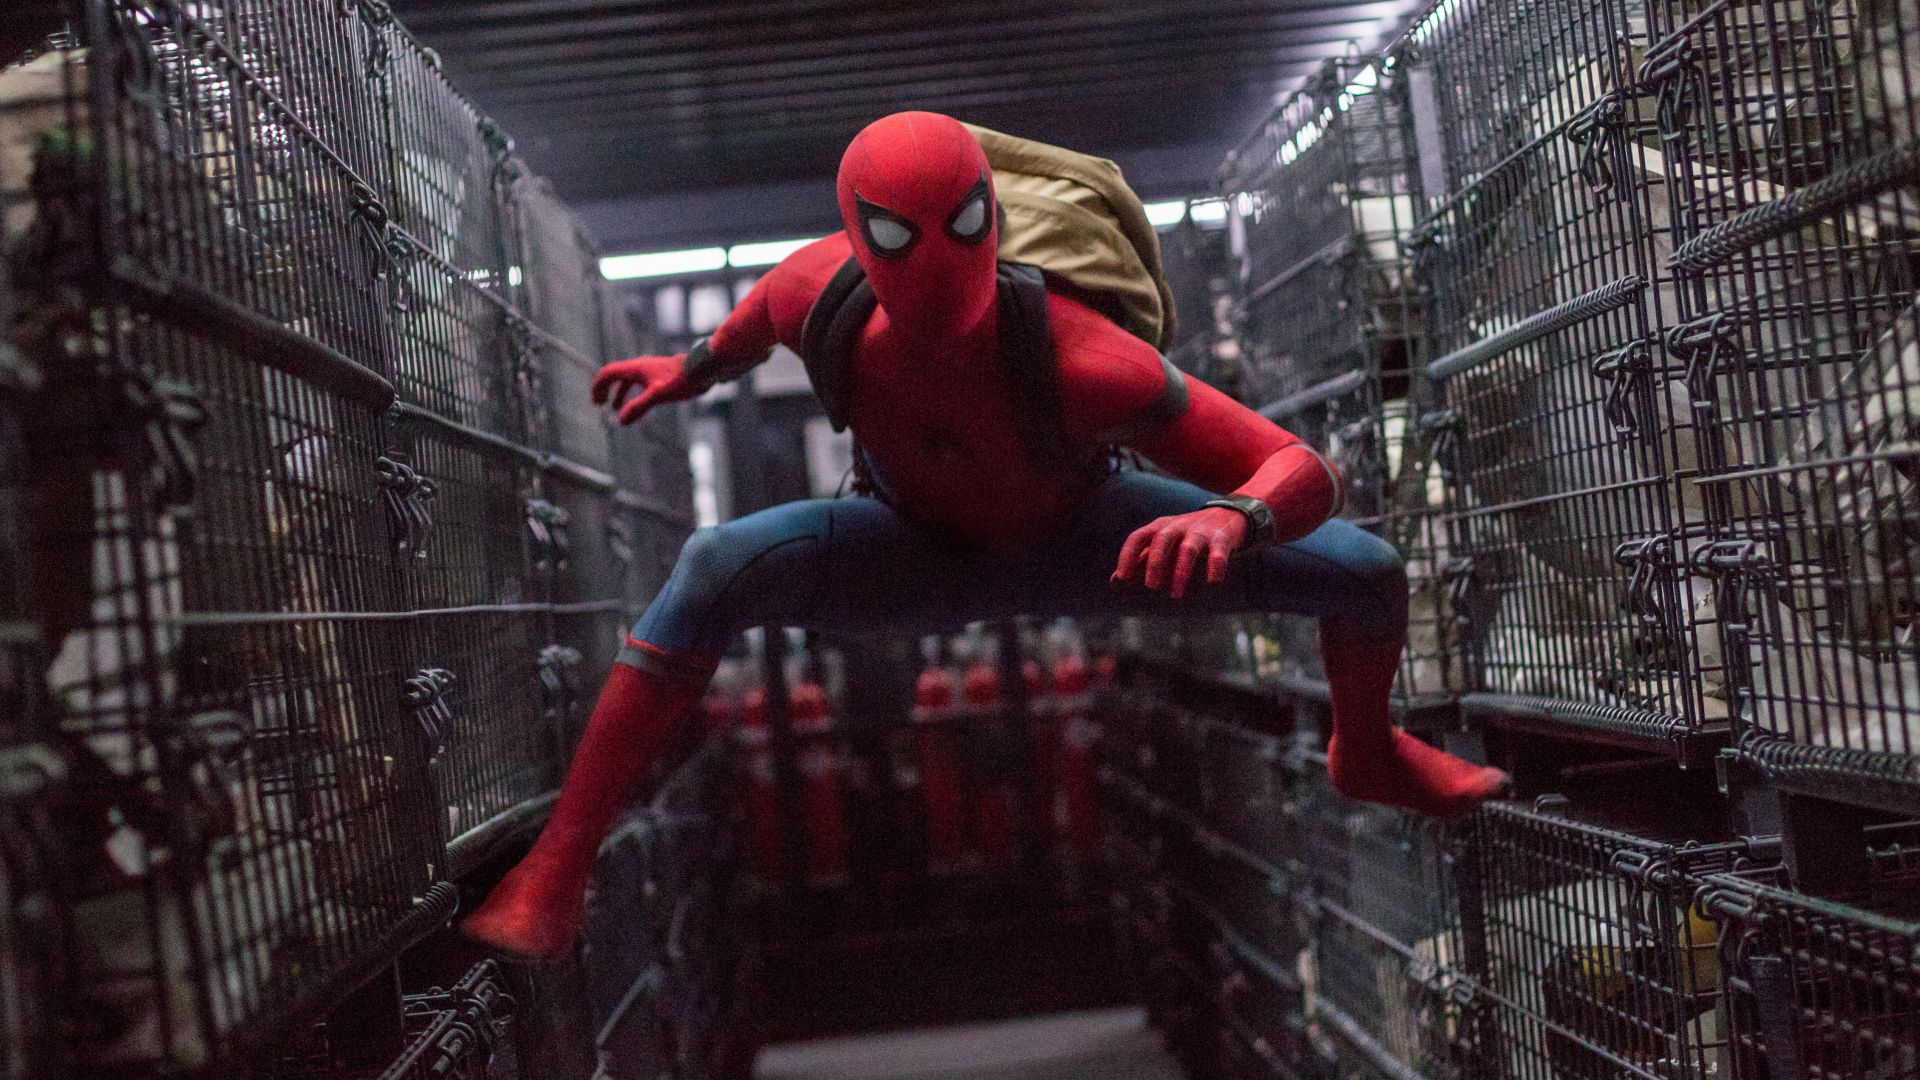 Wallpaper Spider-Man: Homecoming, 4k, 8k, Tom Holland, Marvel, Movies #136371920 x 1080